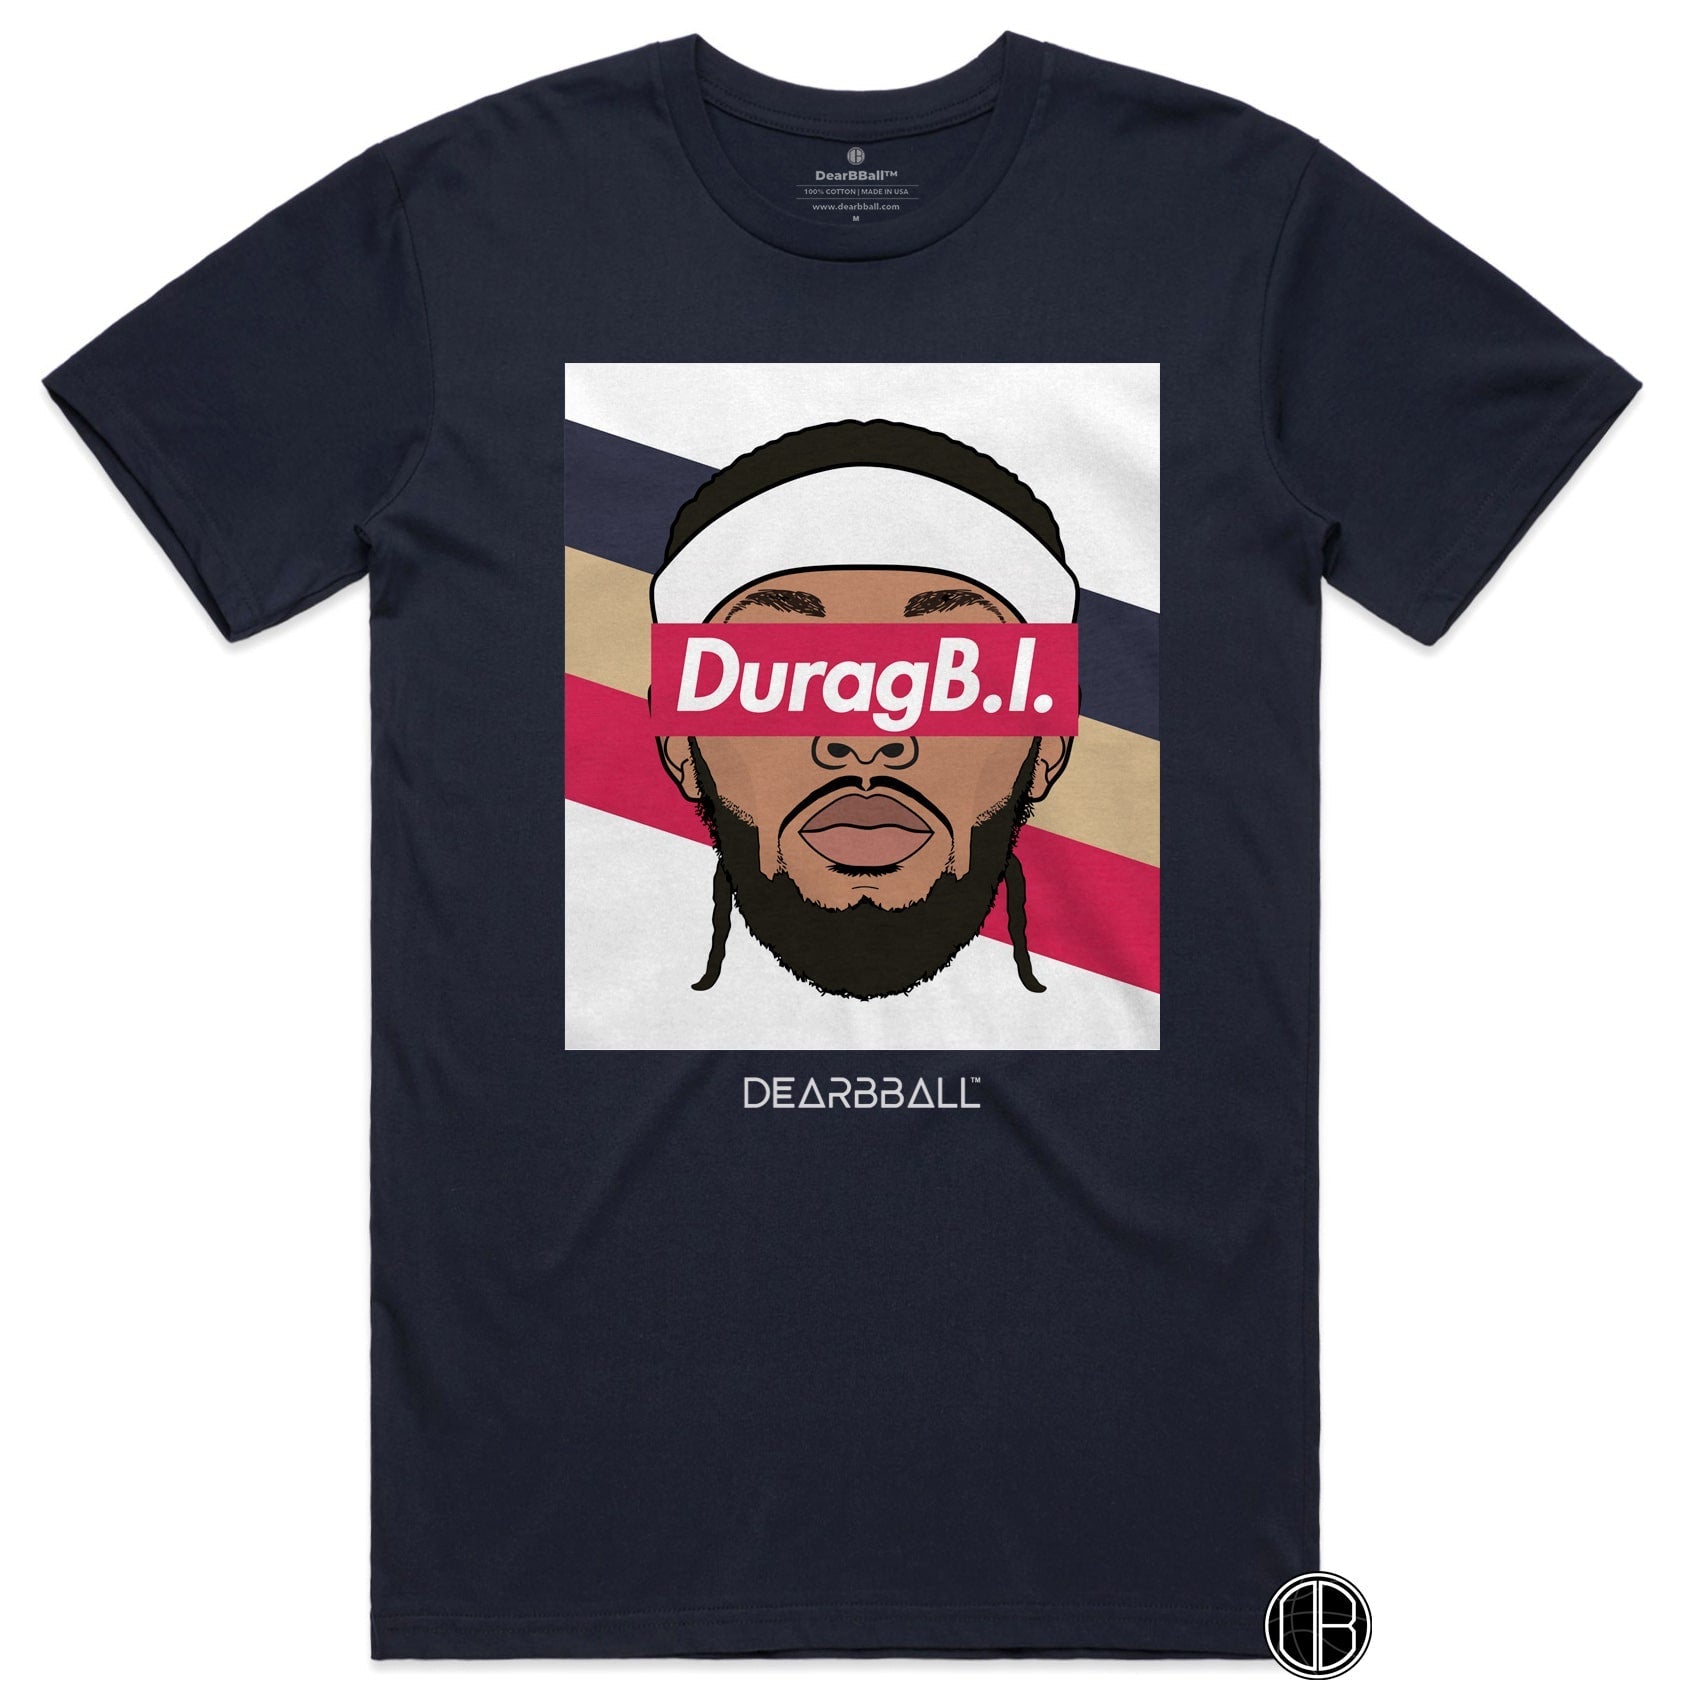 T-Shirt-Brandon-Ingram-New-Orleans-Pelicans-Dearbball-clothes-brand-france